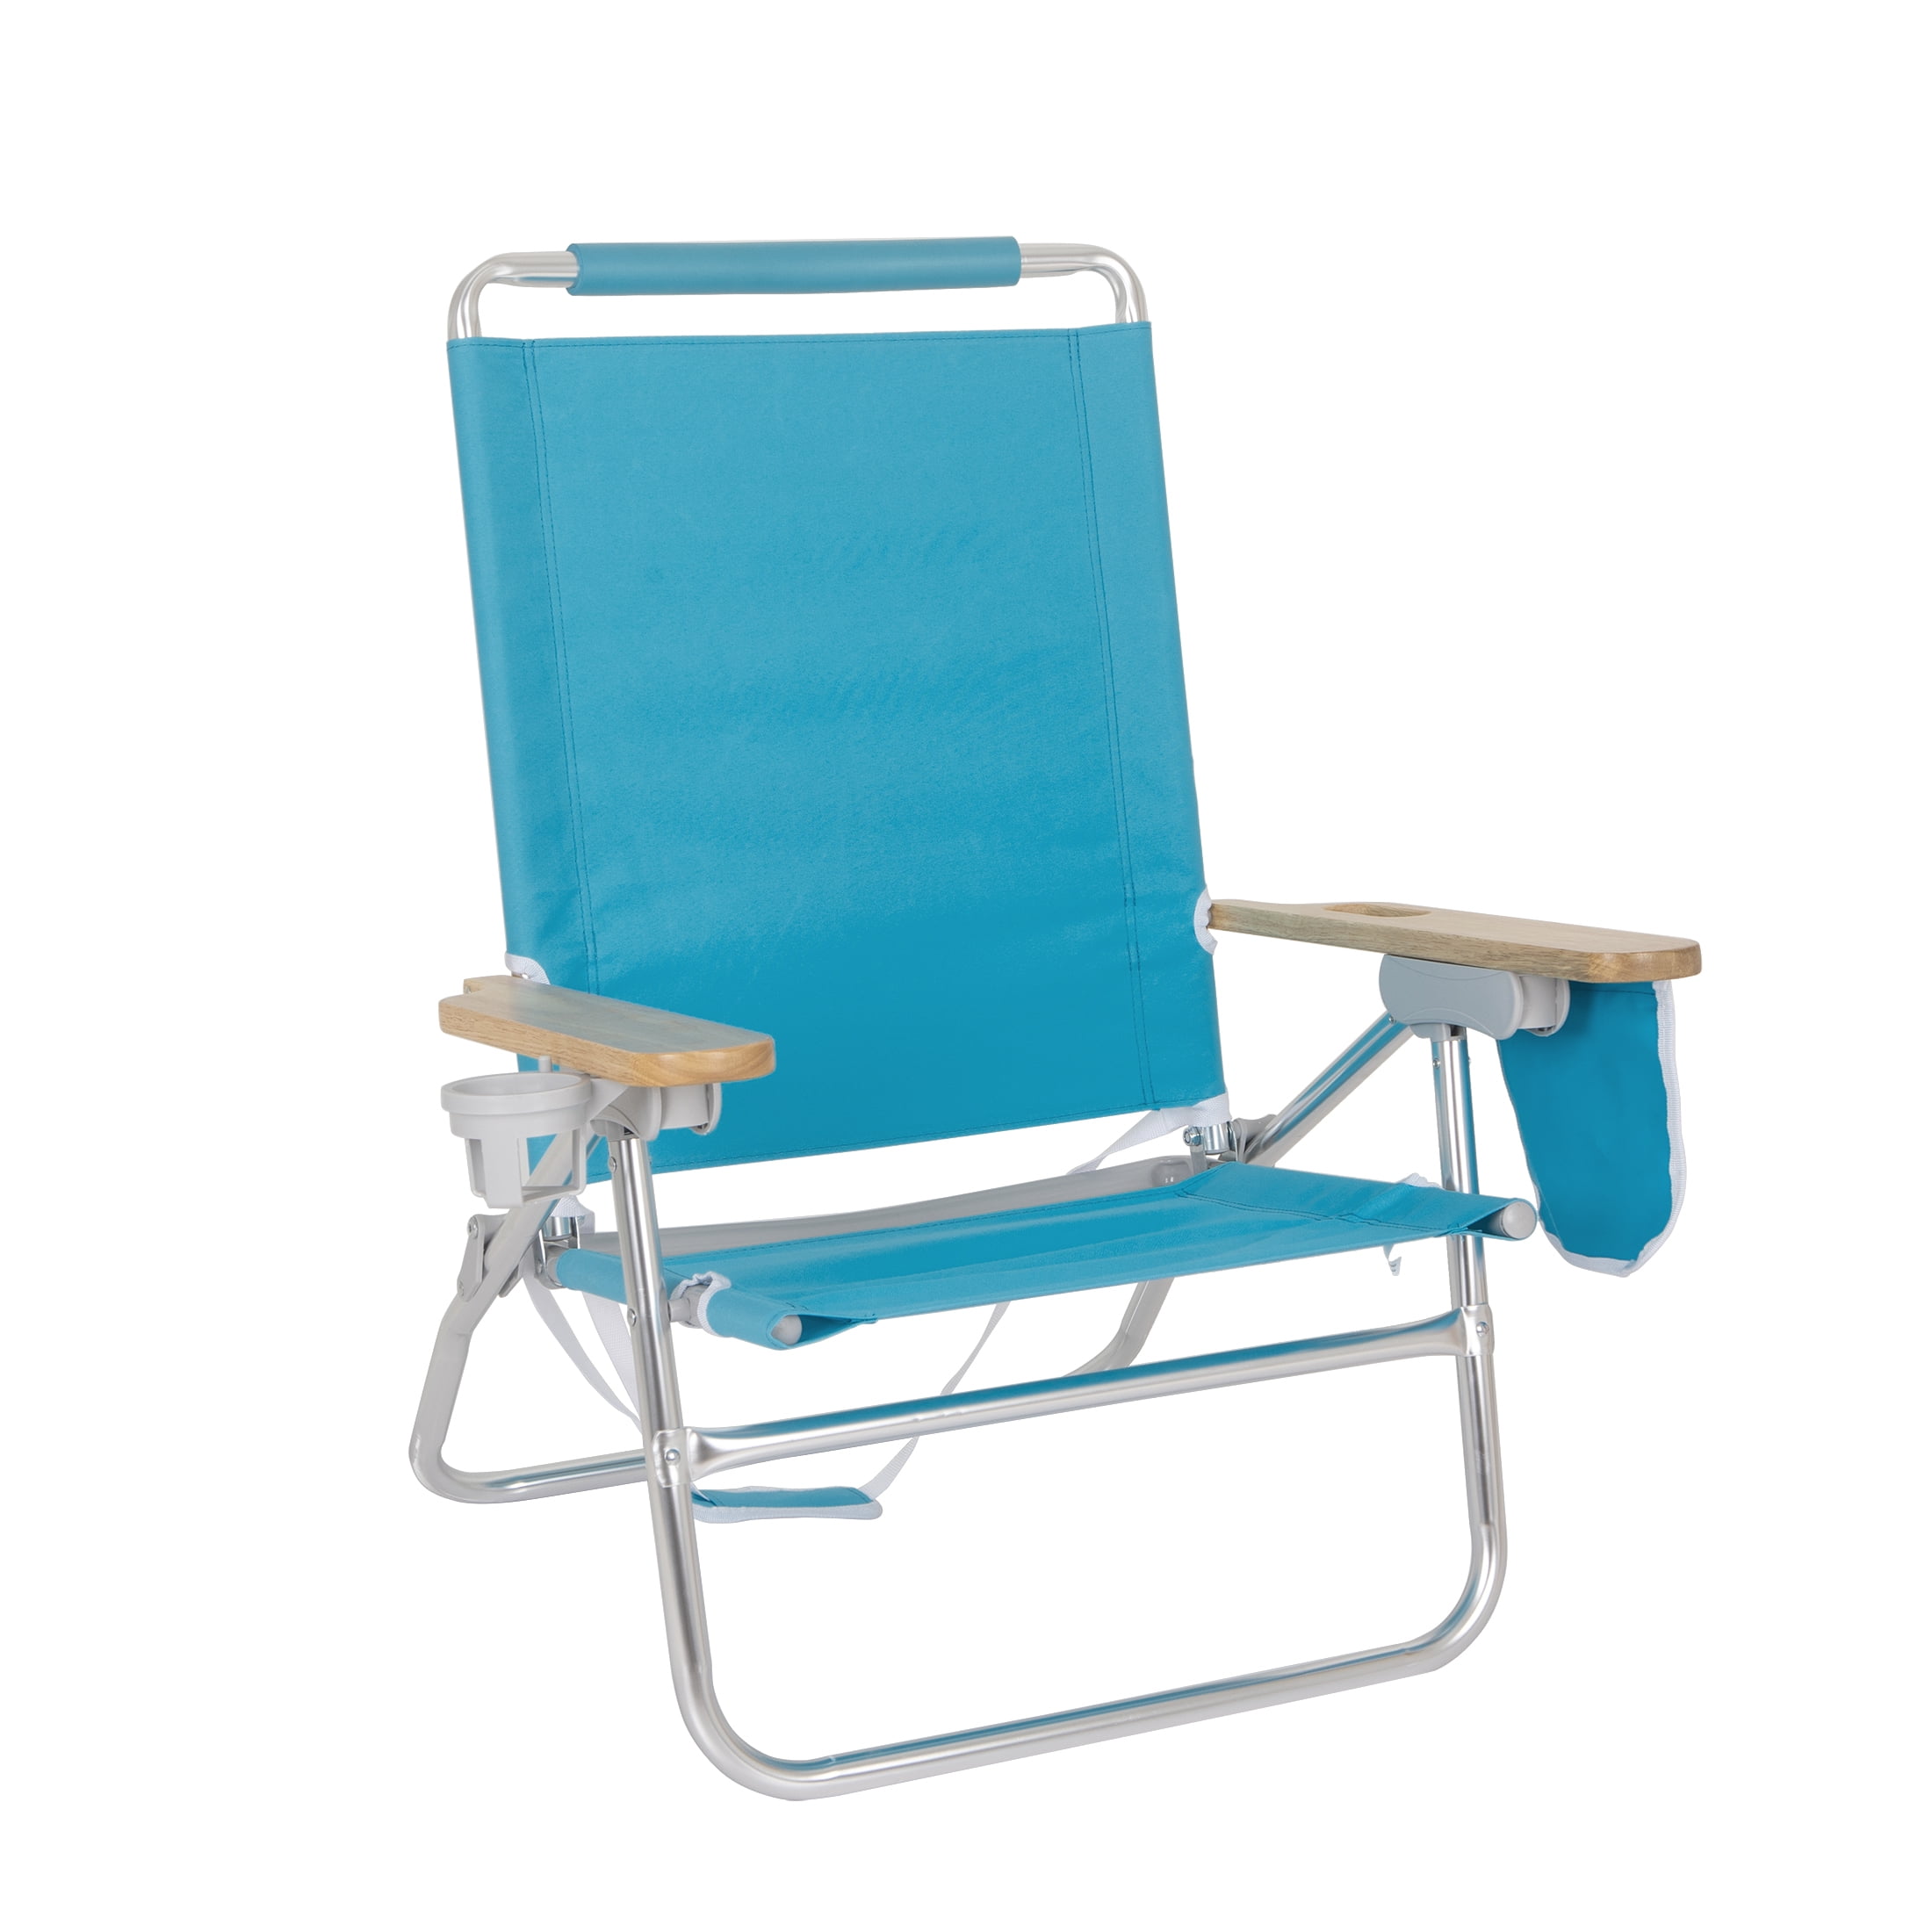 Mainstays Wood Arm Reclining Comfort Height Beach Chair, Teal - Walmart.com